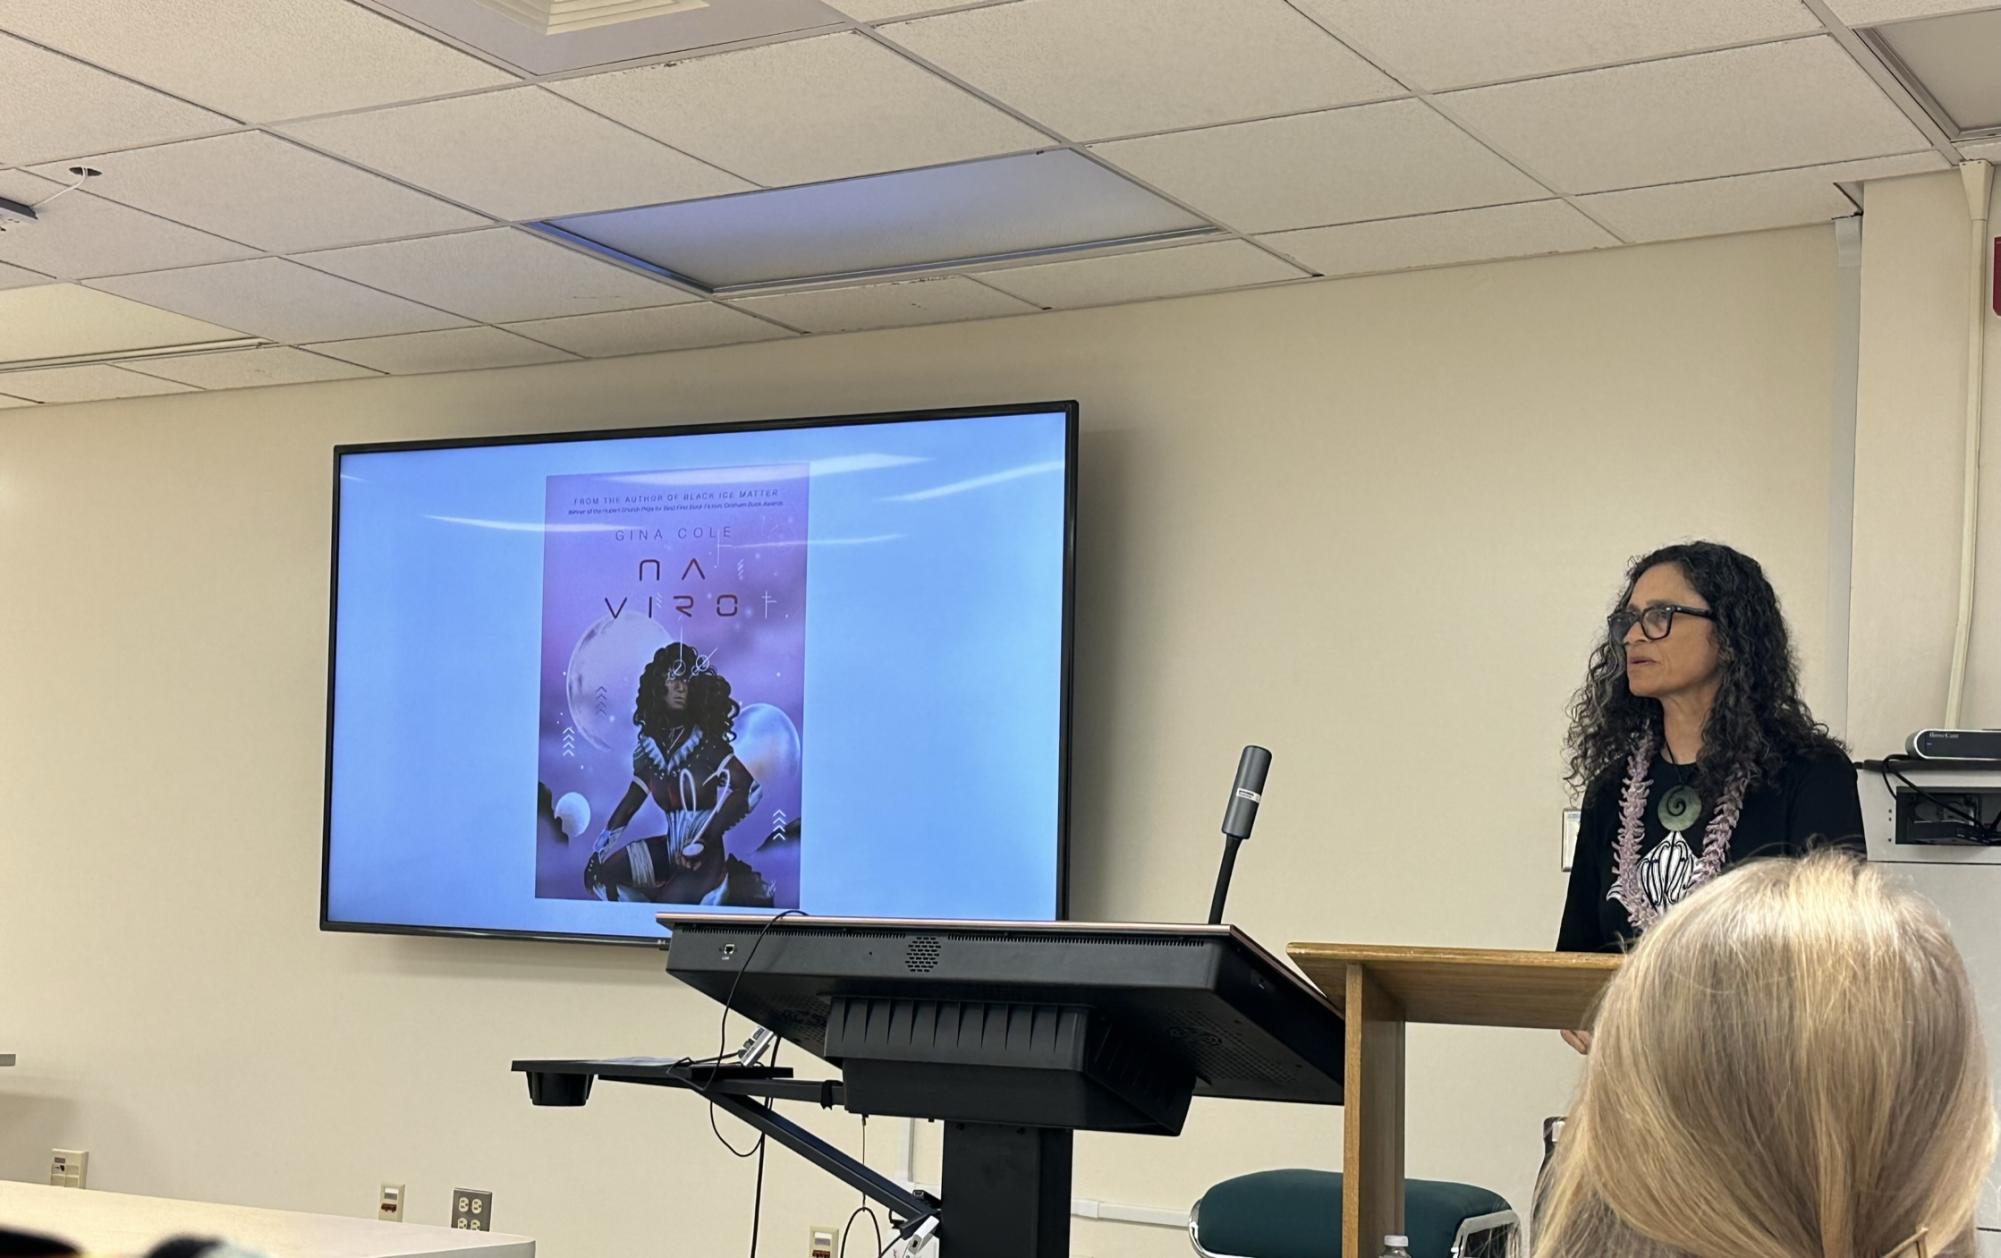 During a speech at UH, Gina Cole showcases her Pasifika Futurism novel titled Na Viro.